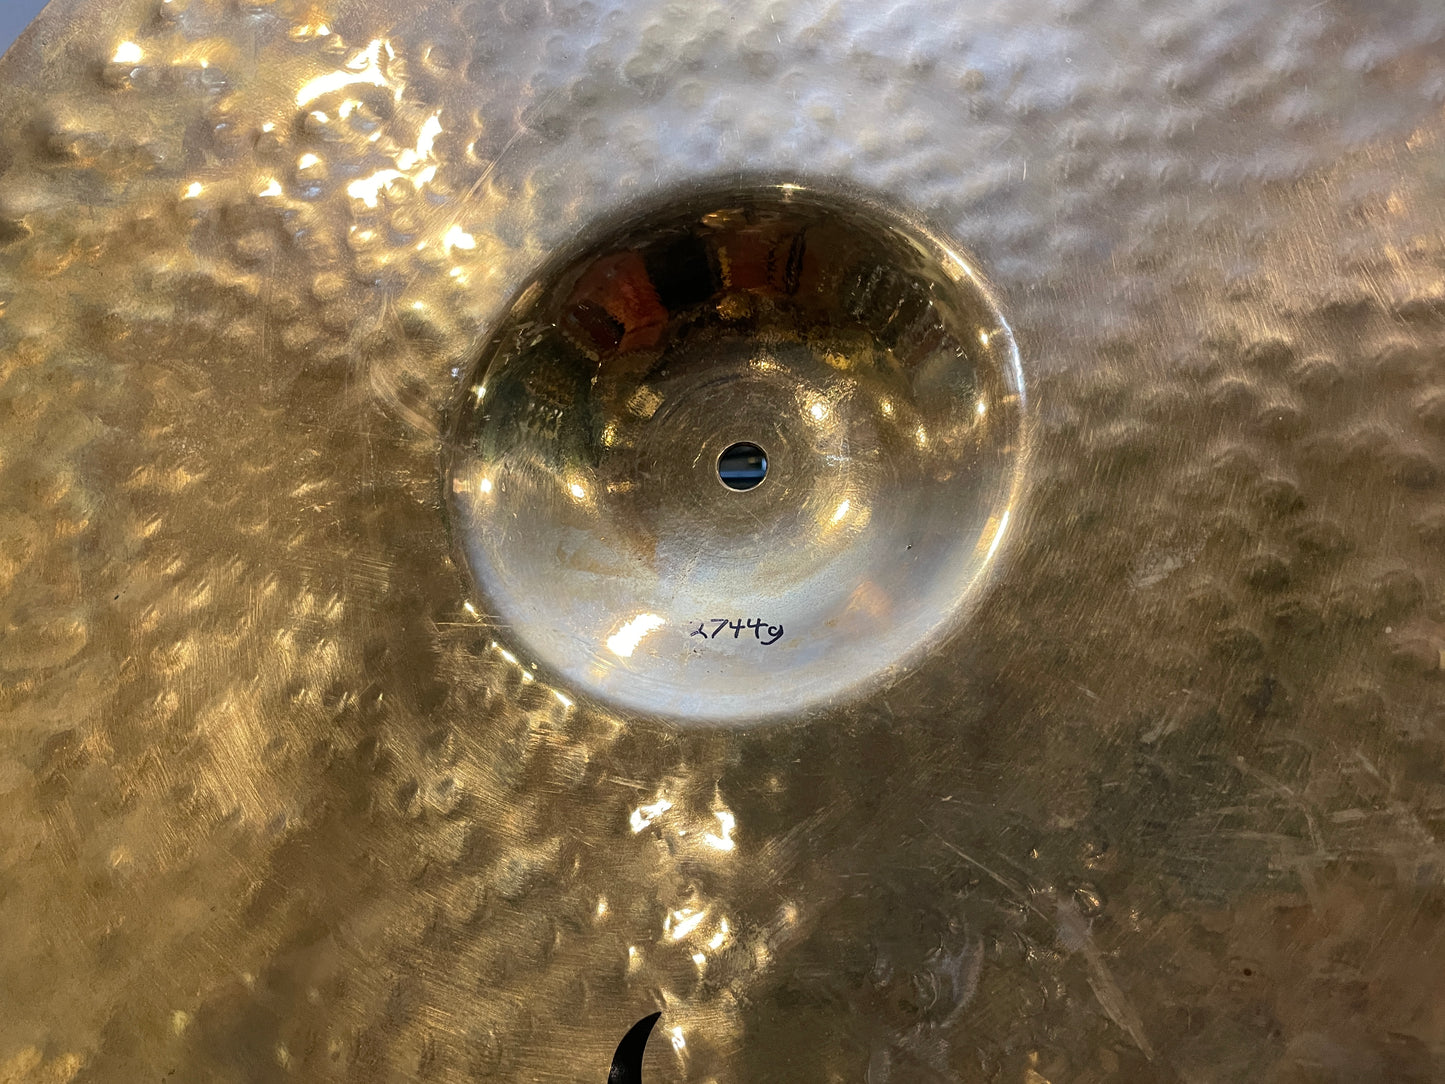 20" Zildjian K Custom Session Ride Cymbal 2744g K0997